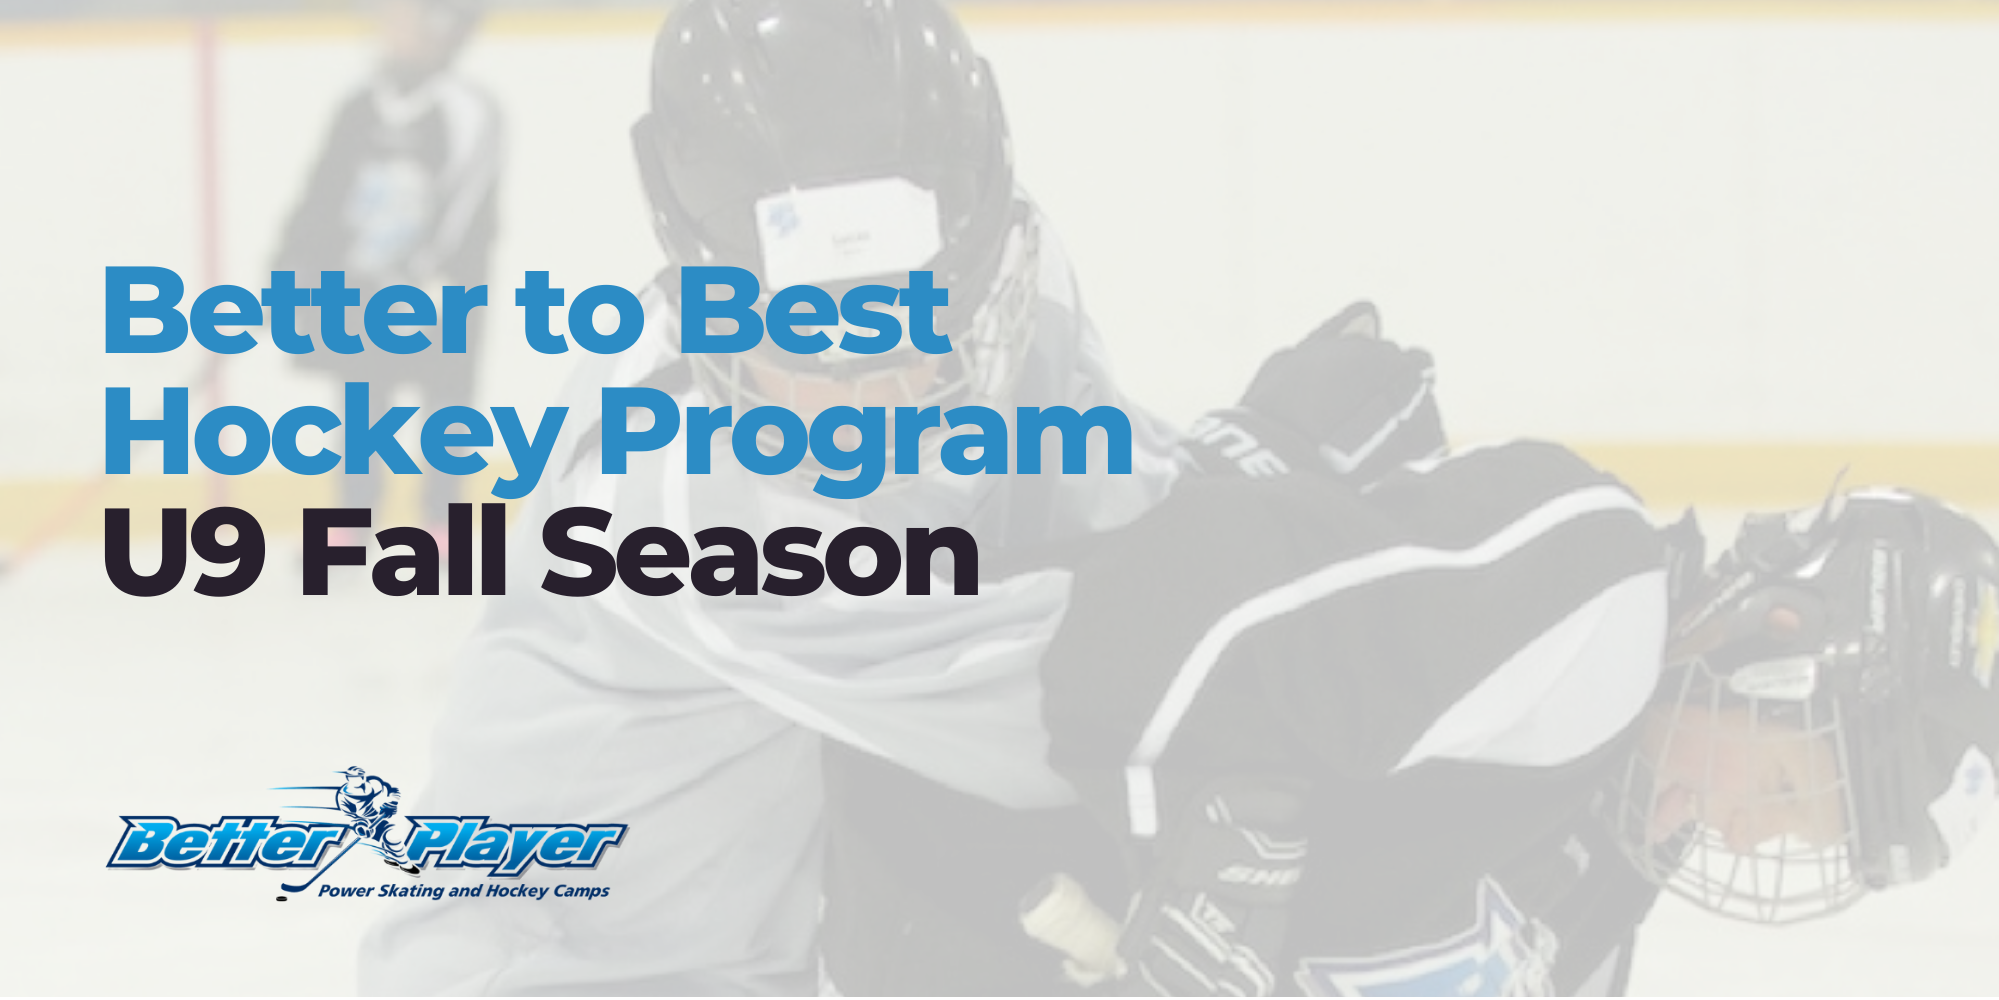 U9 Fall Season | Better to Best Hockey Program